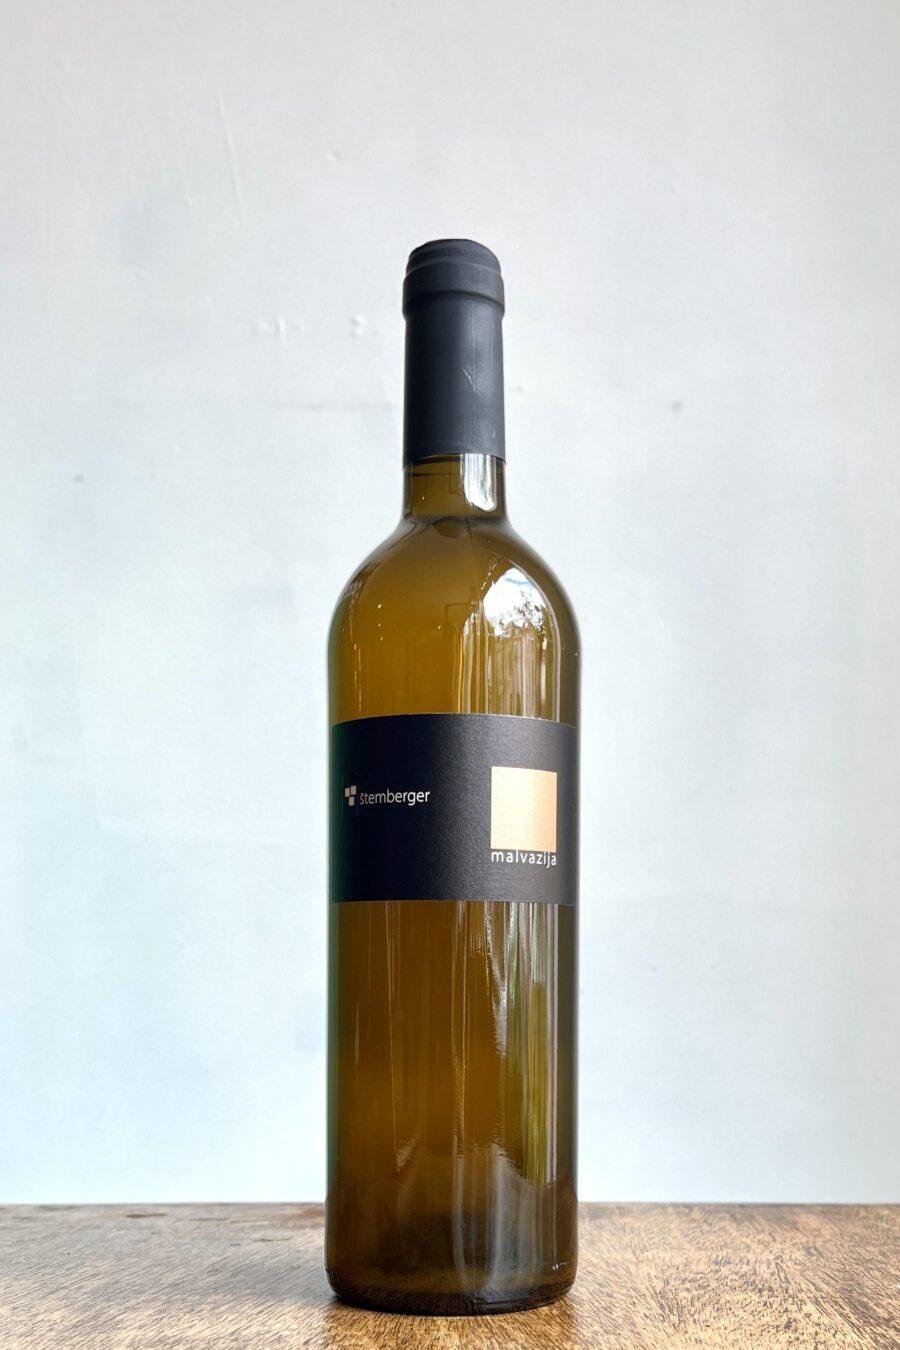 Slovenia oranje wijn amber wijn Malvasia